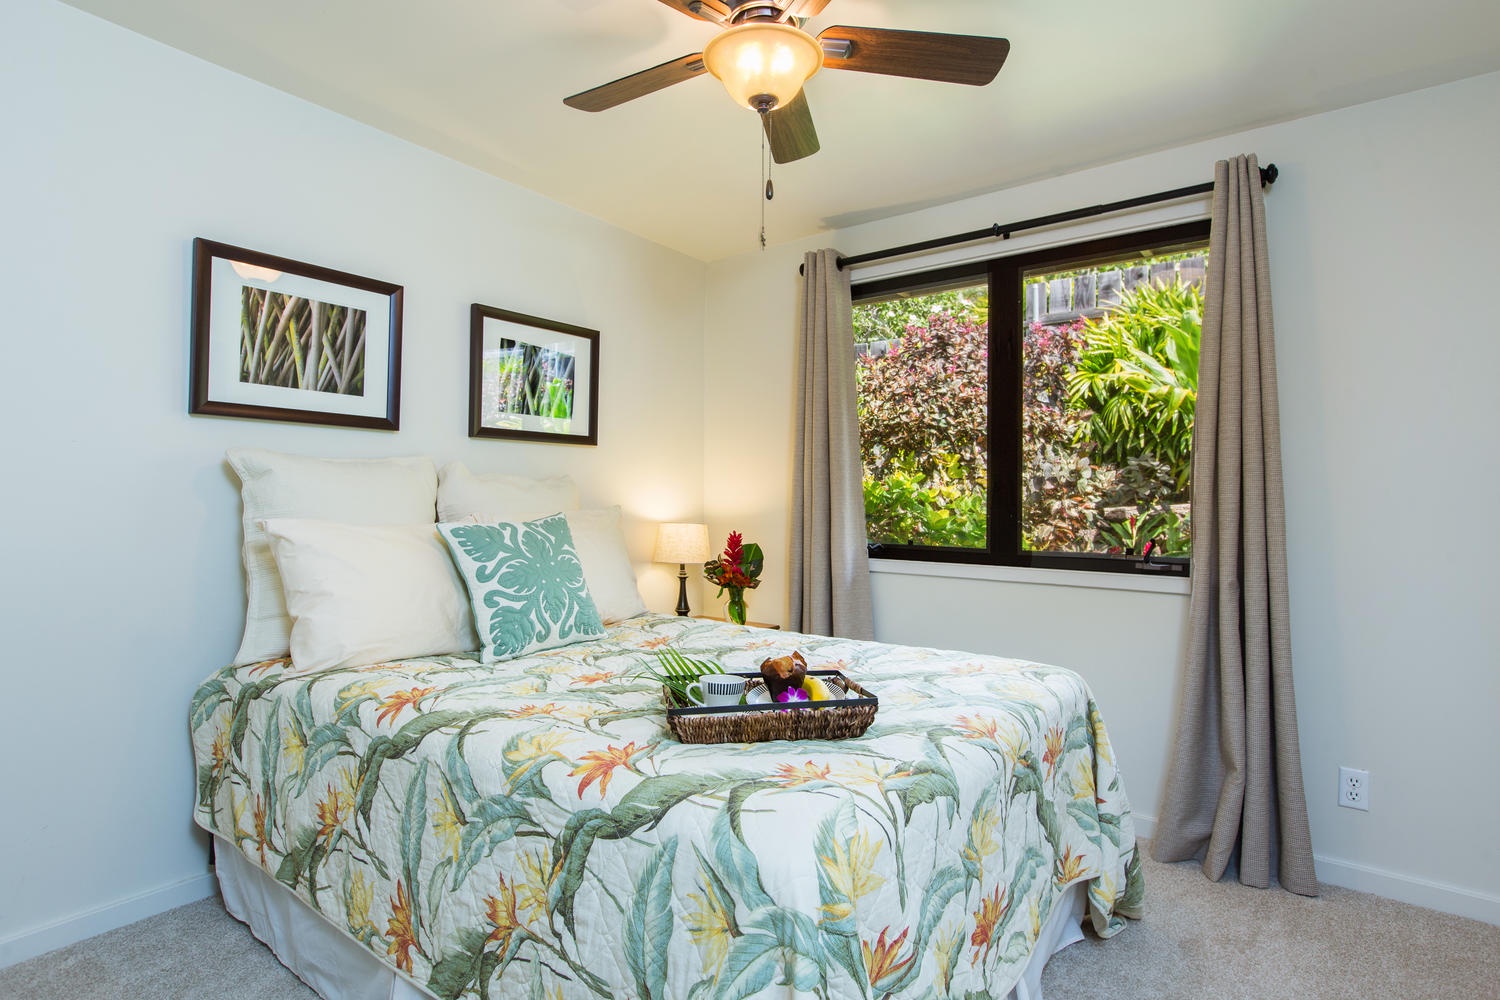 Honolulu Vacation Rentals, Hale Poola - Bedroom five with beautiful garden views.